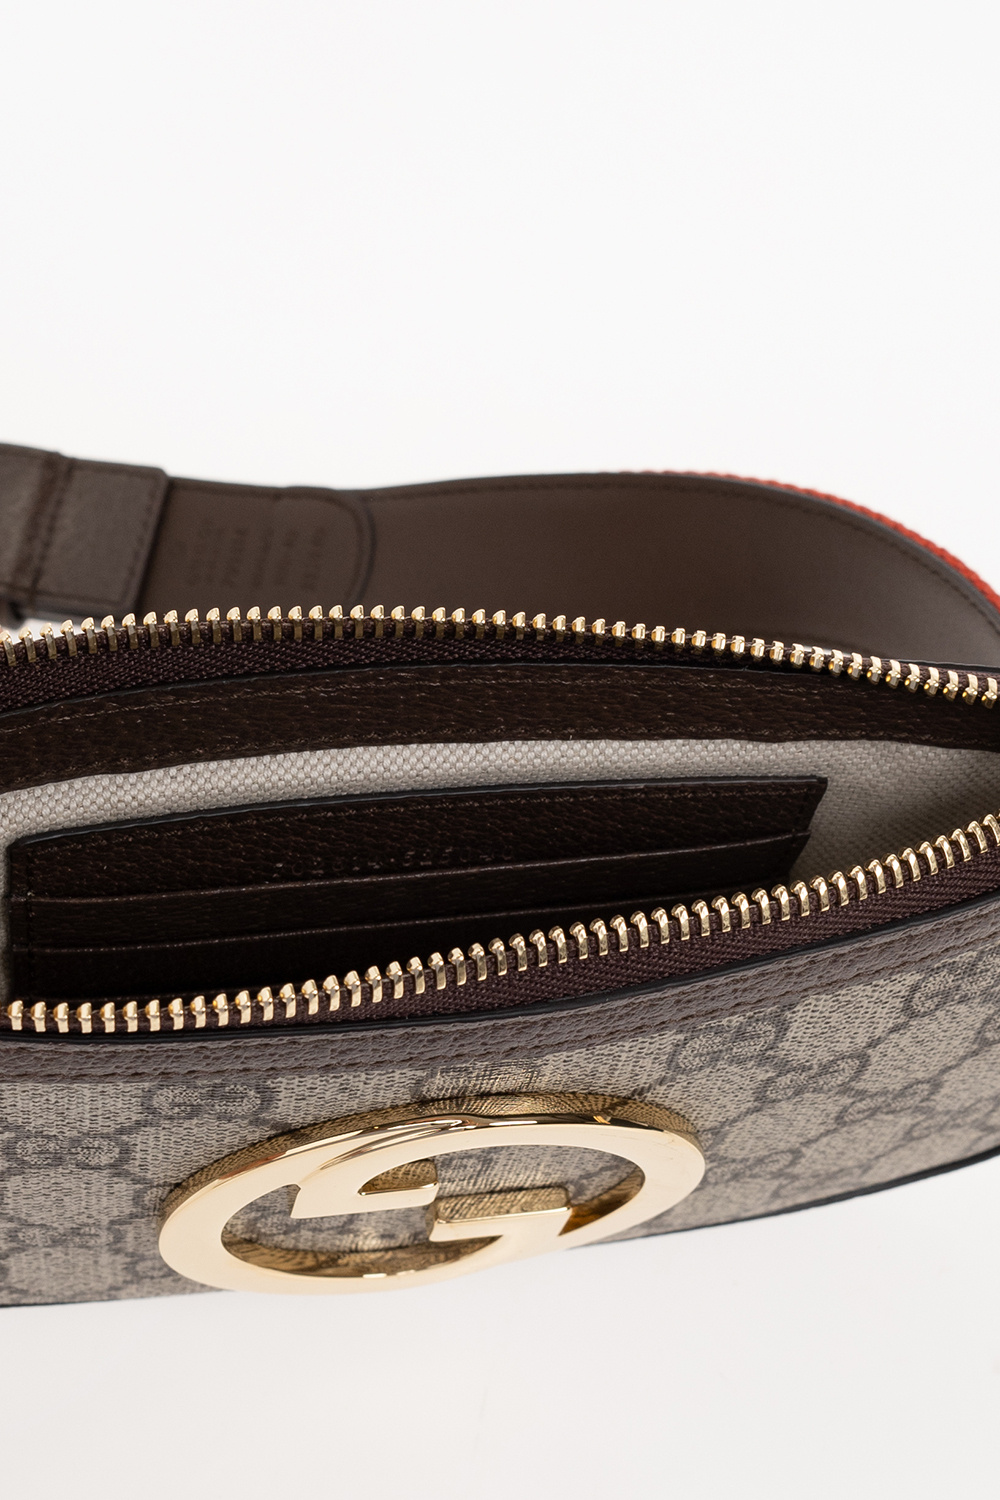 Gucci ‘Blondie’ belt with 3 pouches